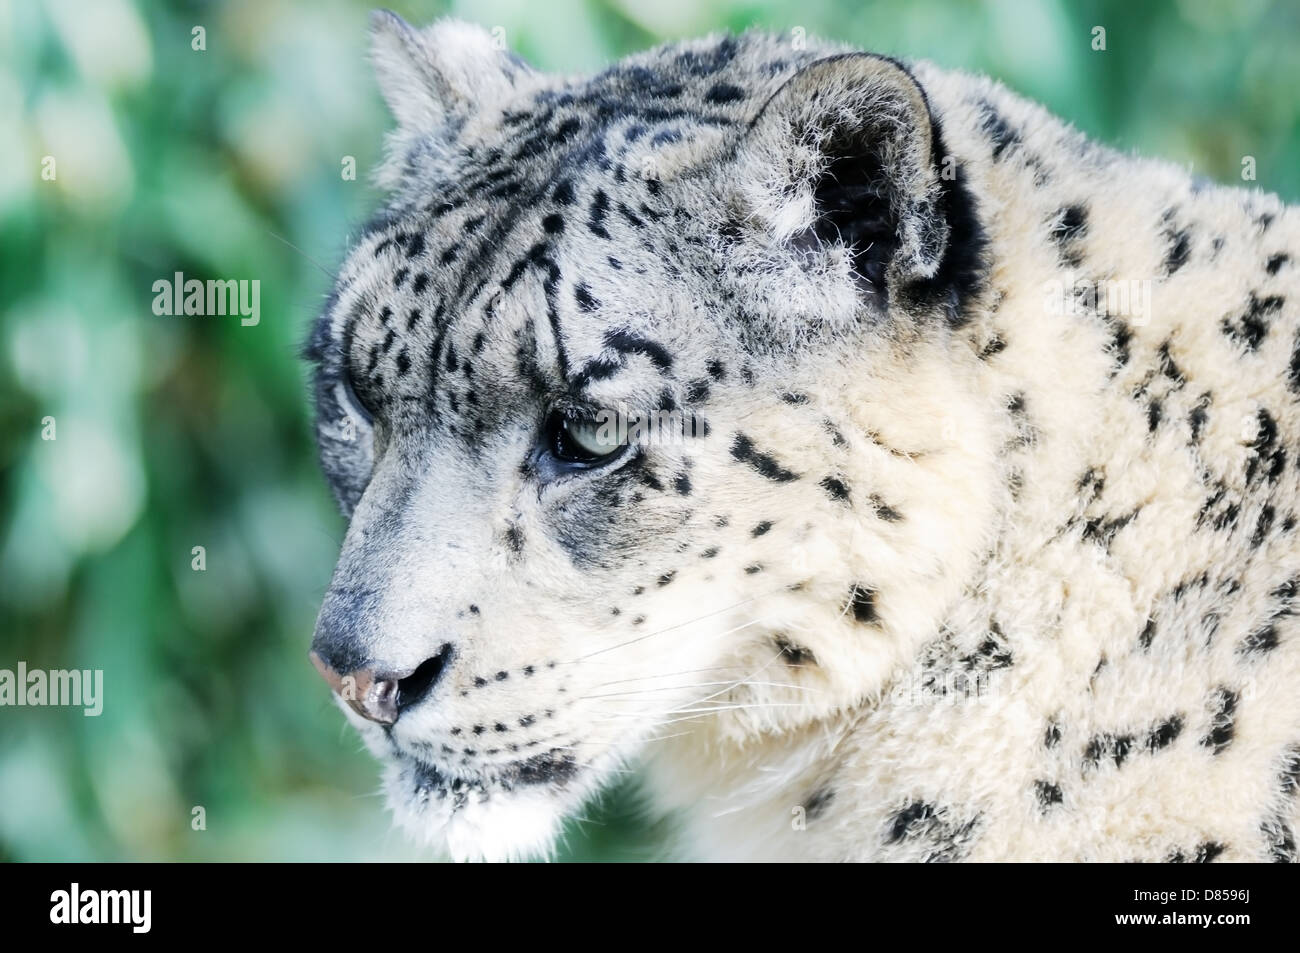 Closeup detail of snow leopard face Stock Photo